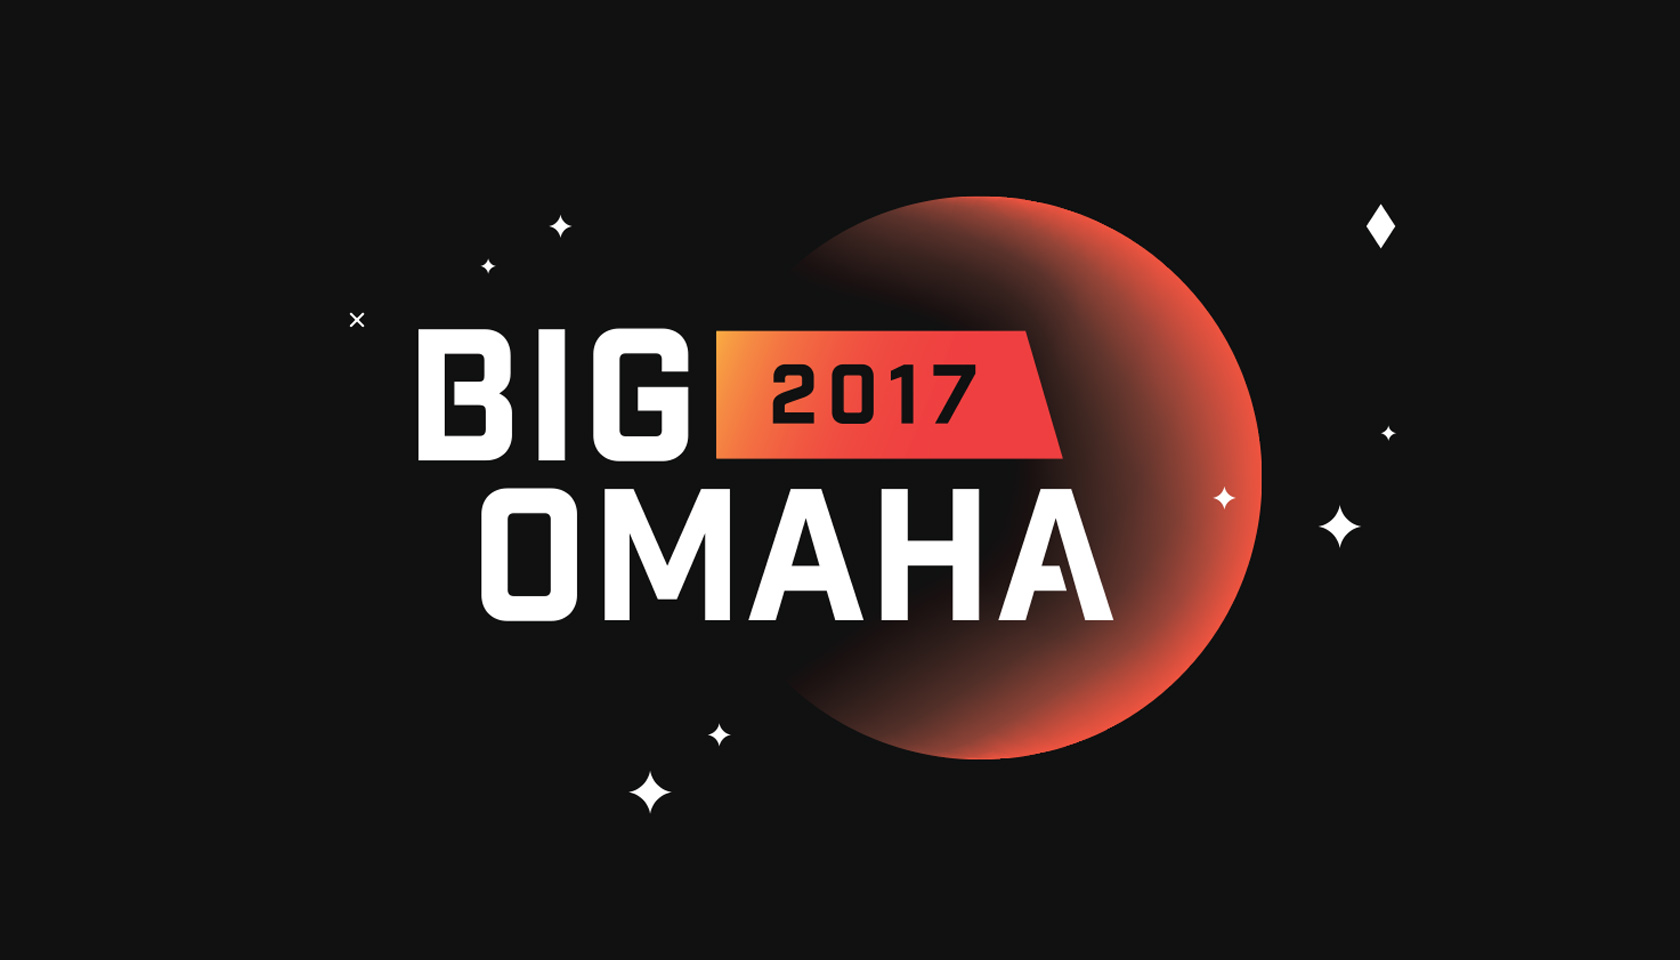 Big Omaha early bird tickets are here!